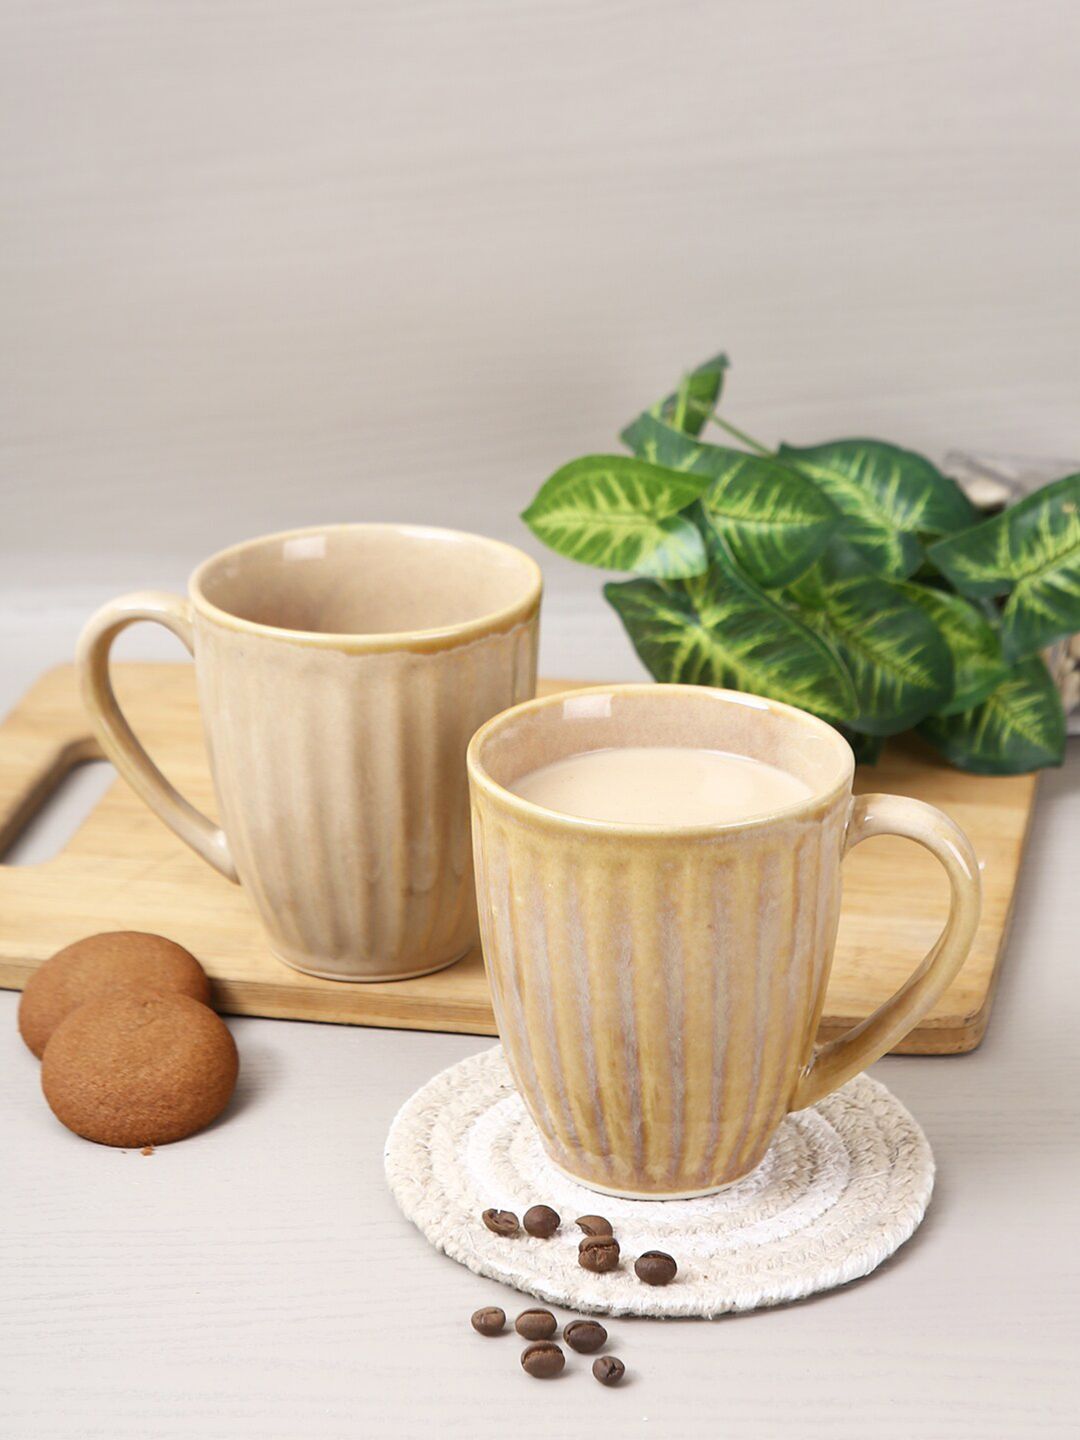 Aapno Rajasthan Brown Printed Ceramic Glossy Cups Set of Cups and Mugs Price in India